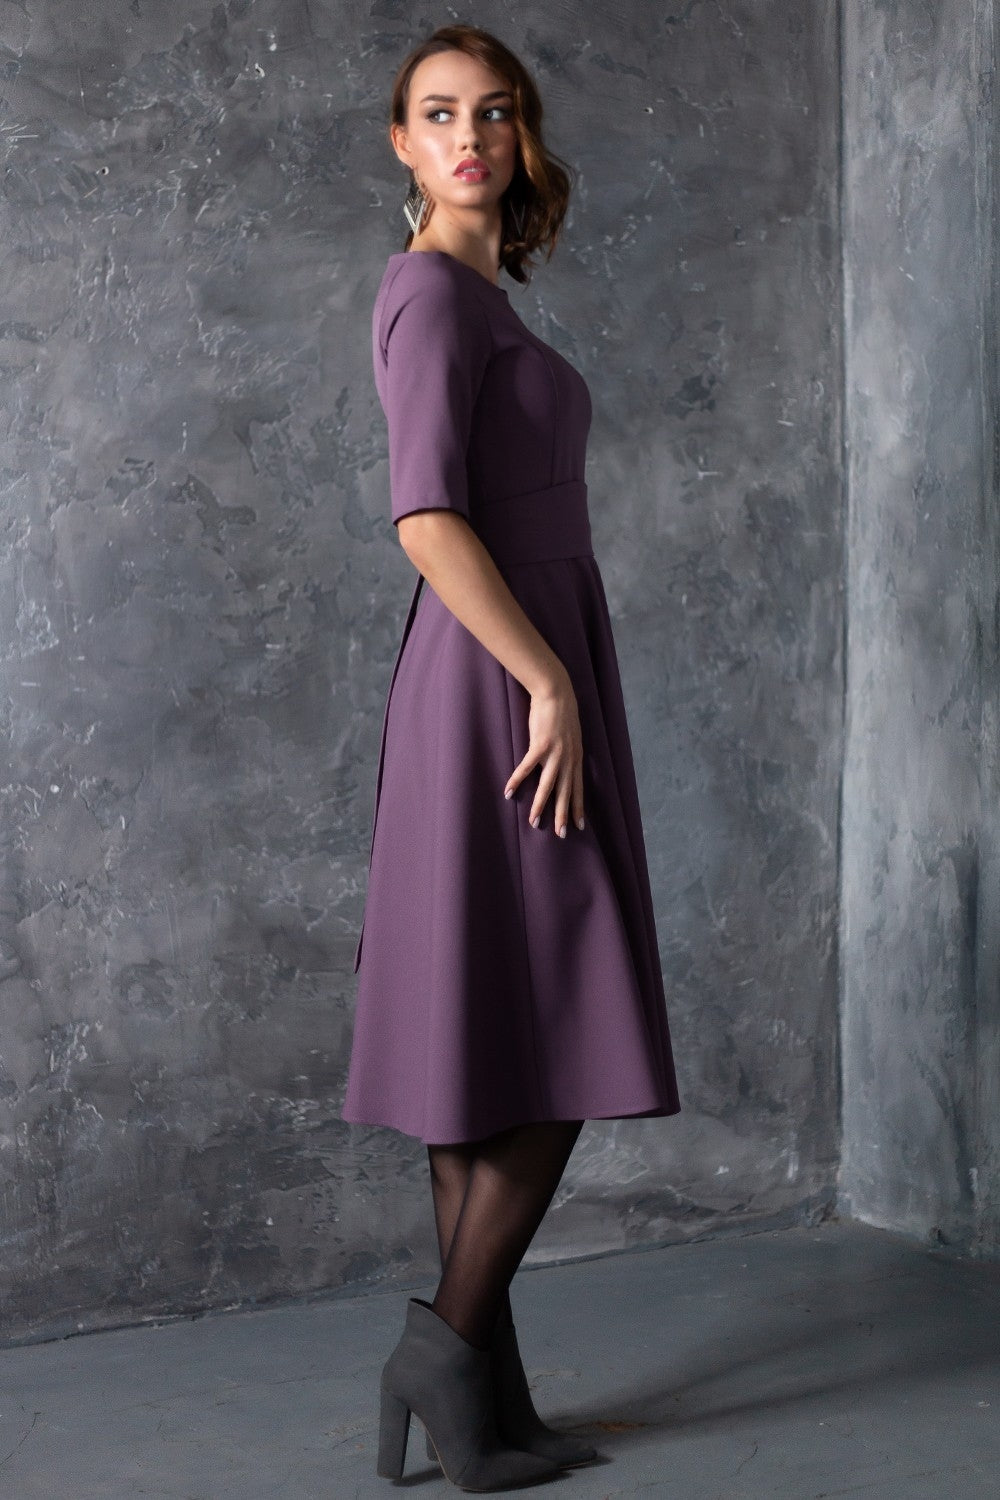 Grey purple dress with circle skirts